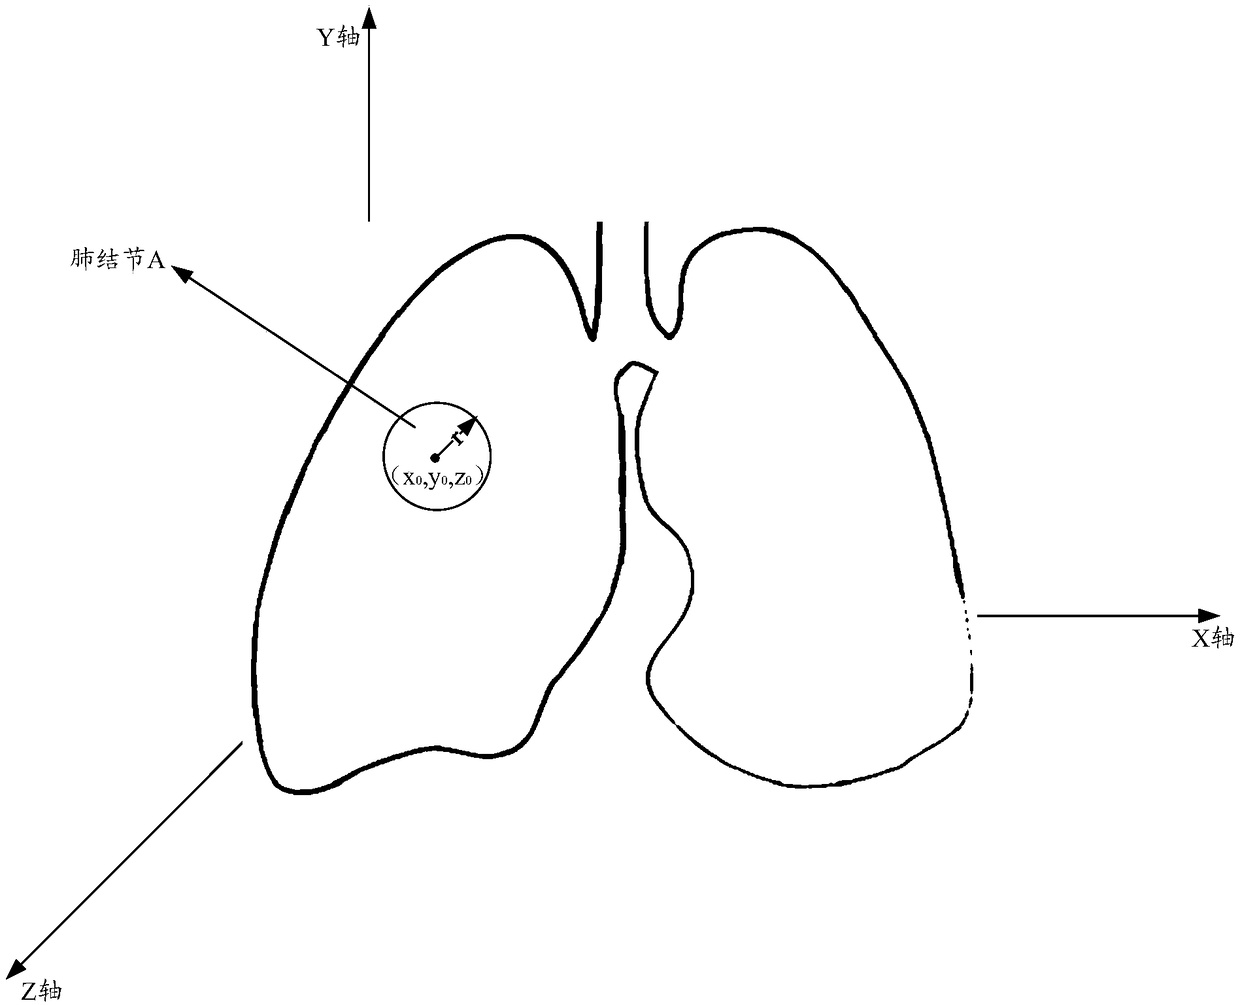 Method and device for analyzing pulmonary nodules